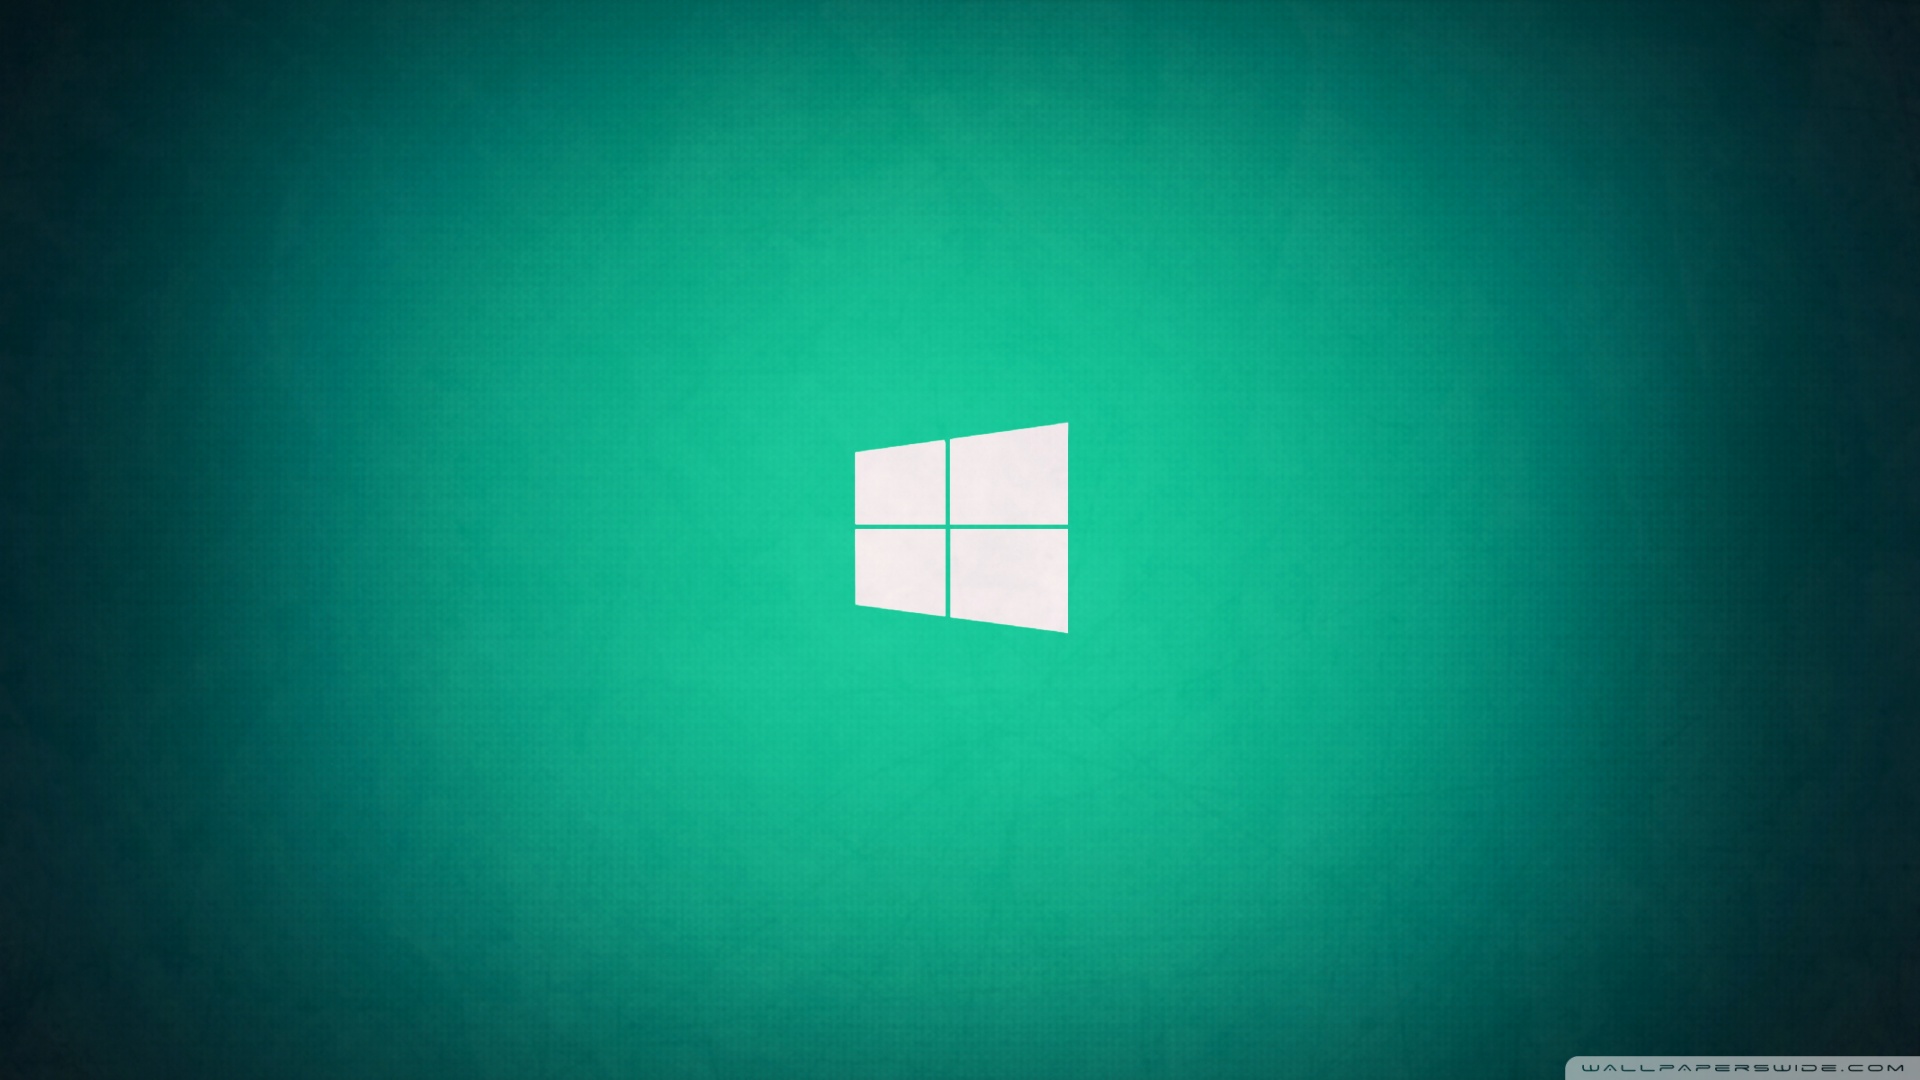 Windows 10 - HD Wallpaper 